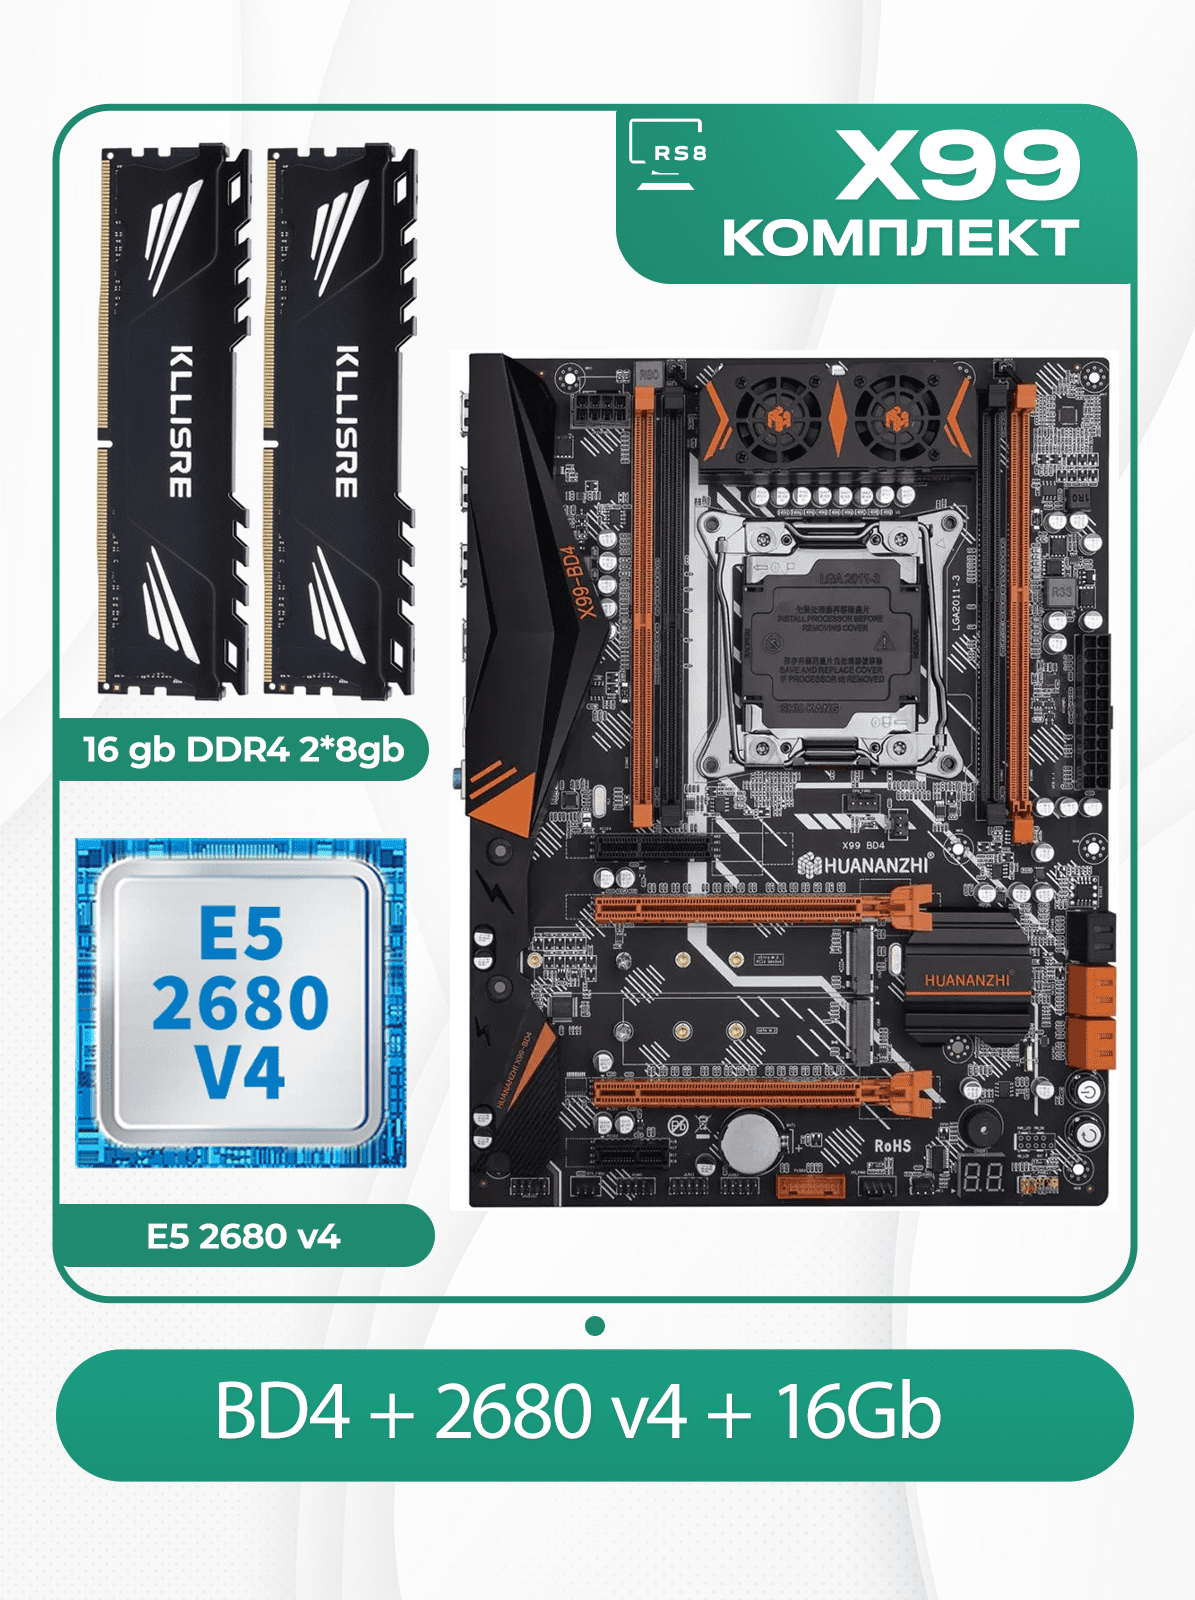 Комплект материнской платы X99: Huananzhi BD4 + Xeon E5 2680v4 + DDR4 16Гб 2666Мгц Kllisre